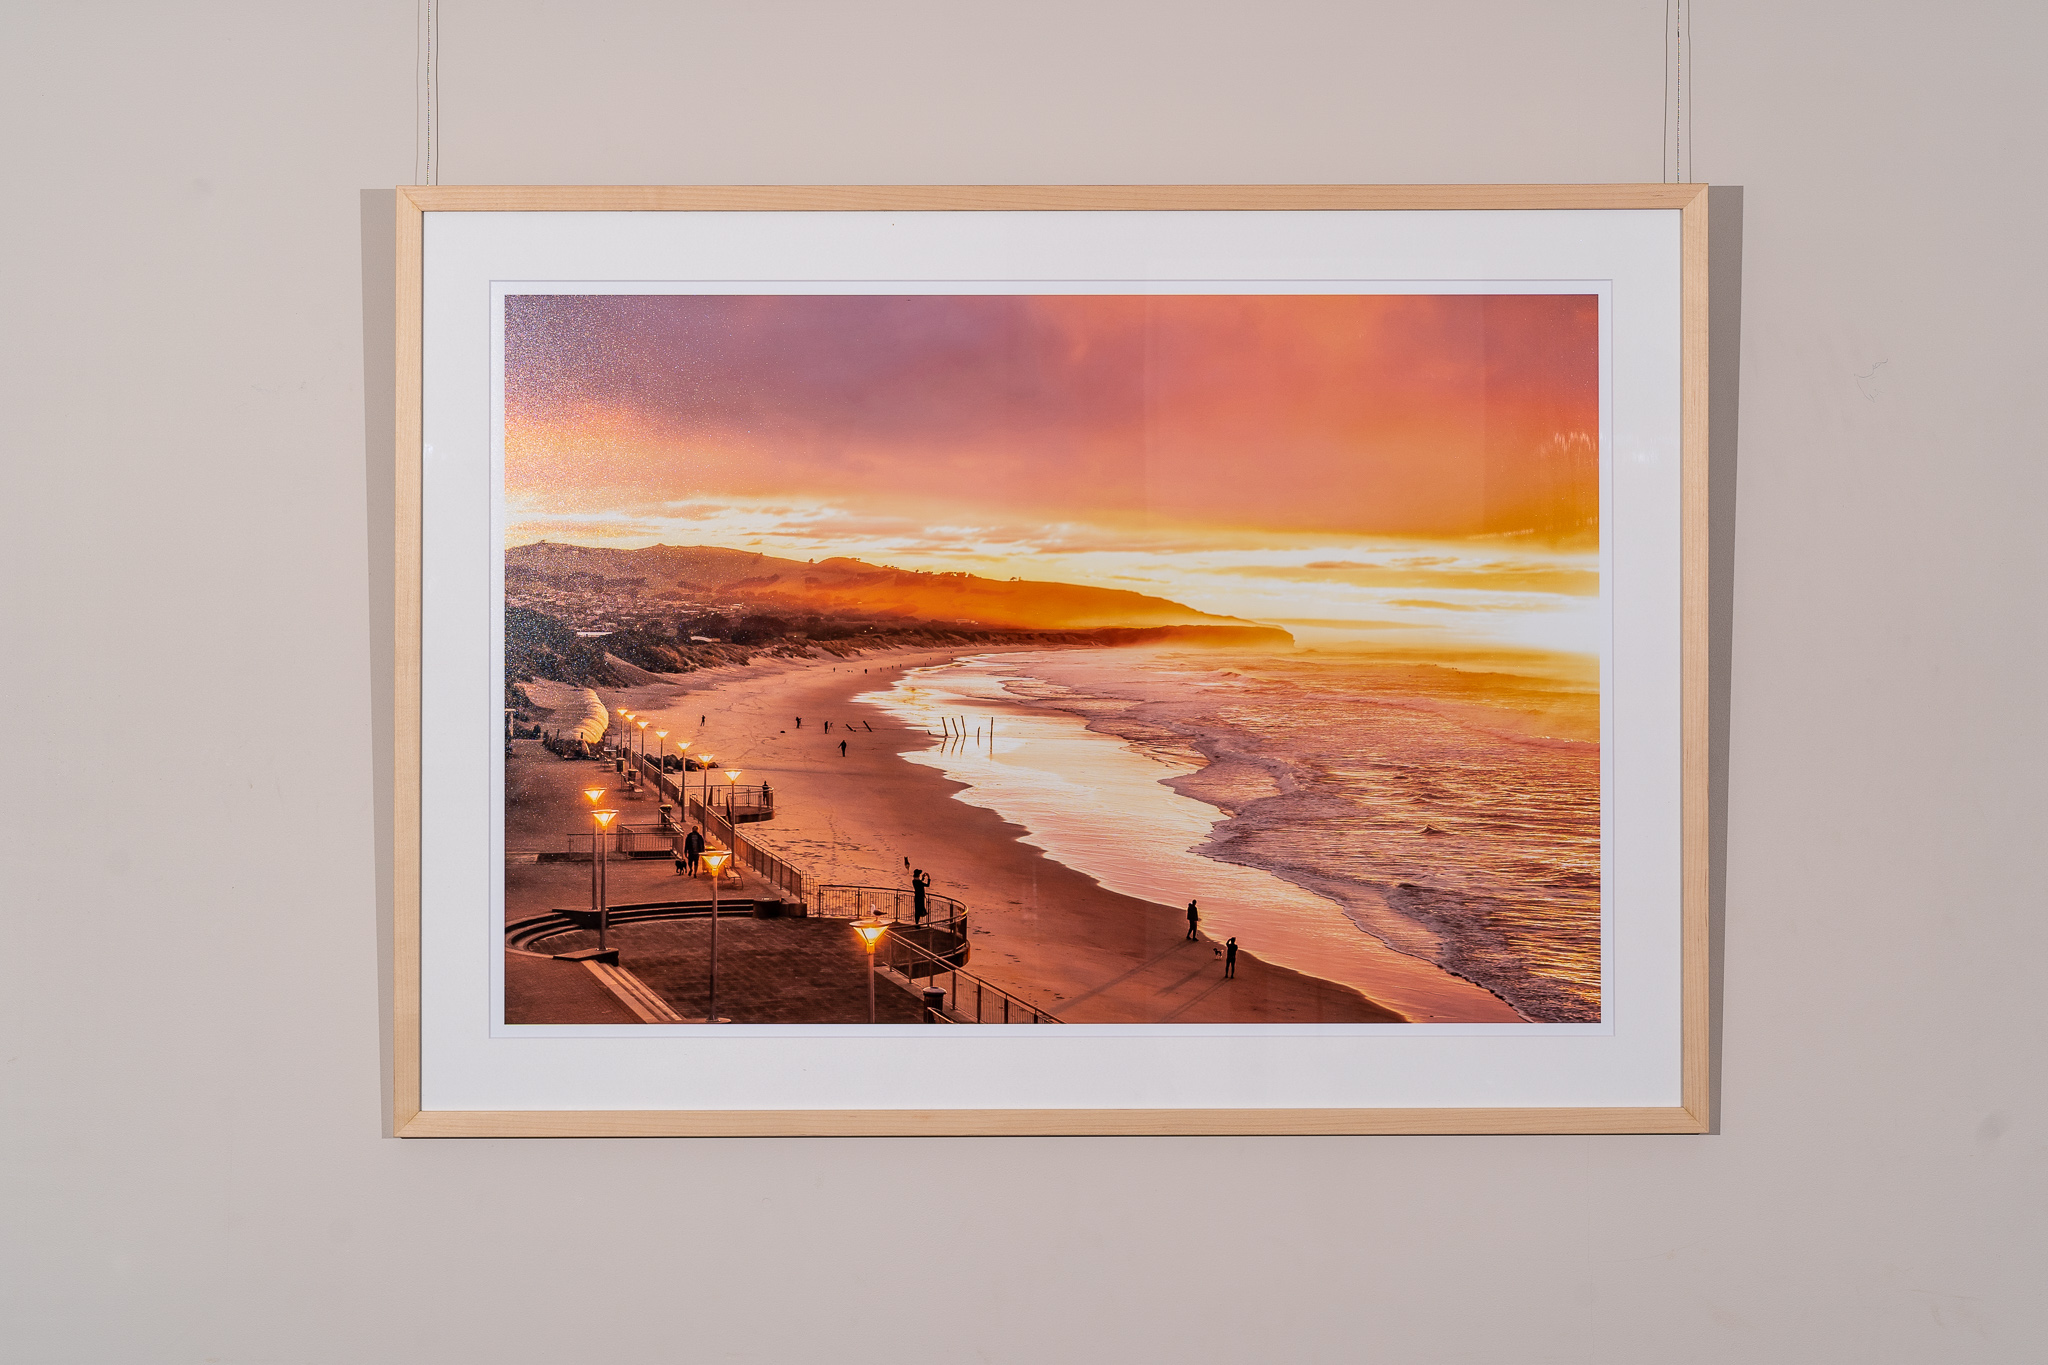 St Clair dunedin beach scene framed photograph